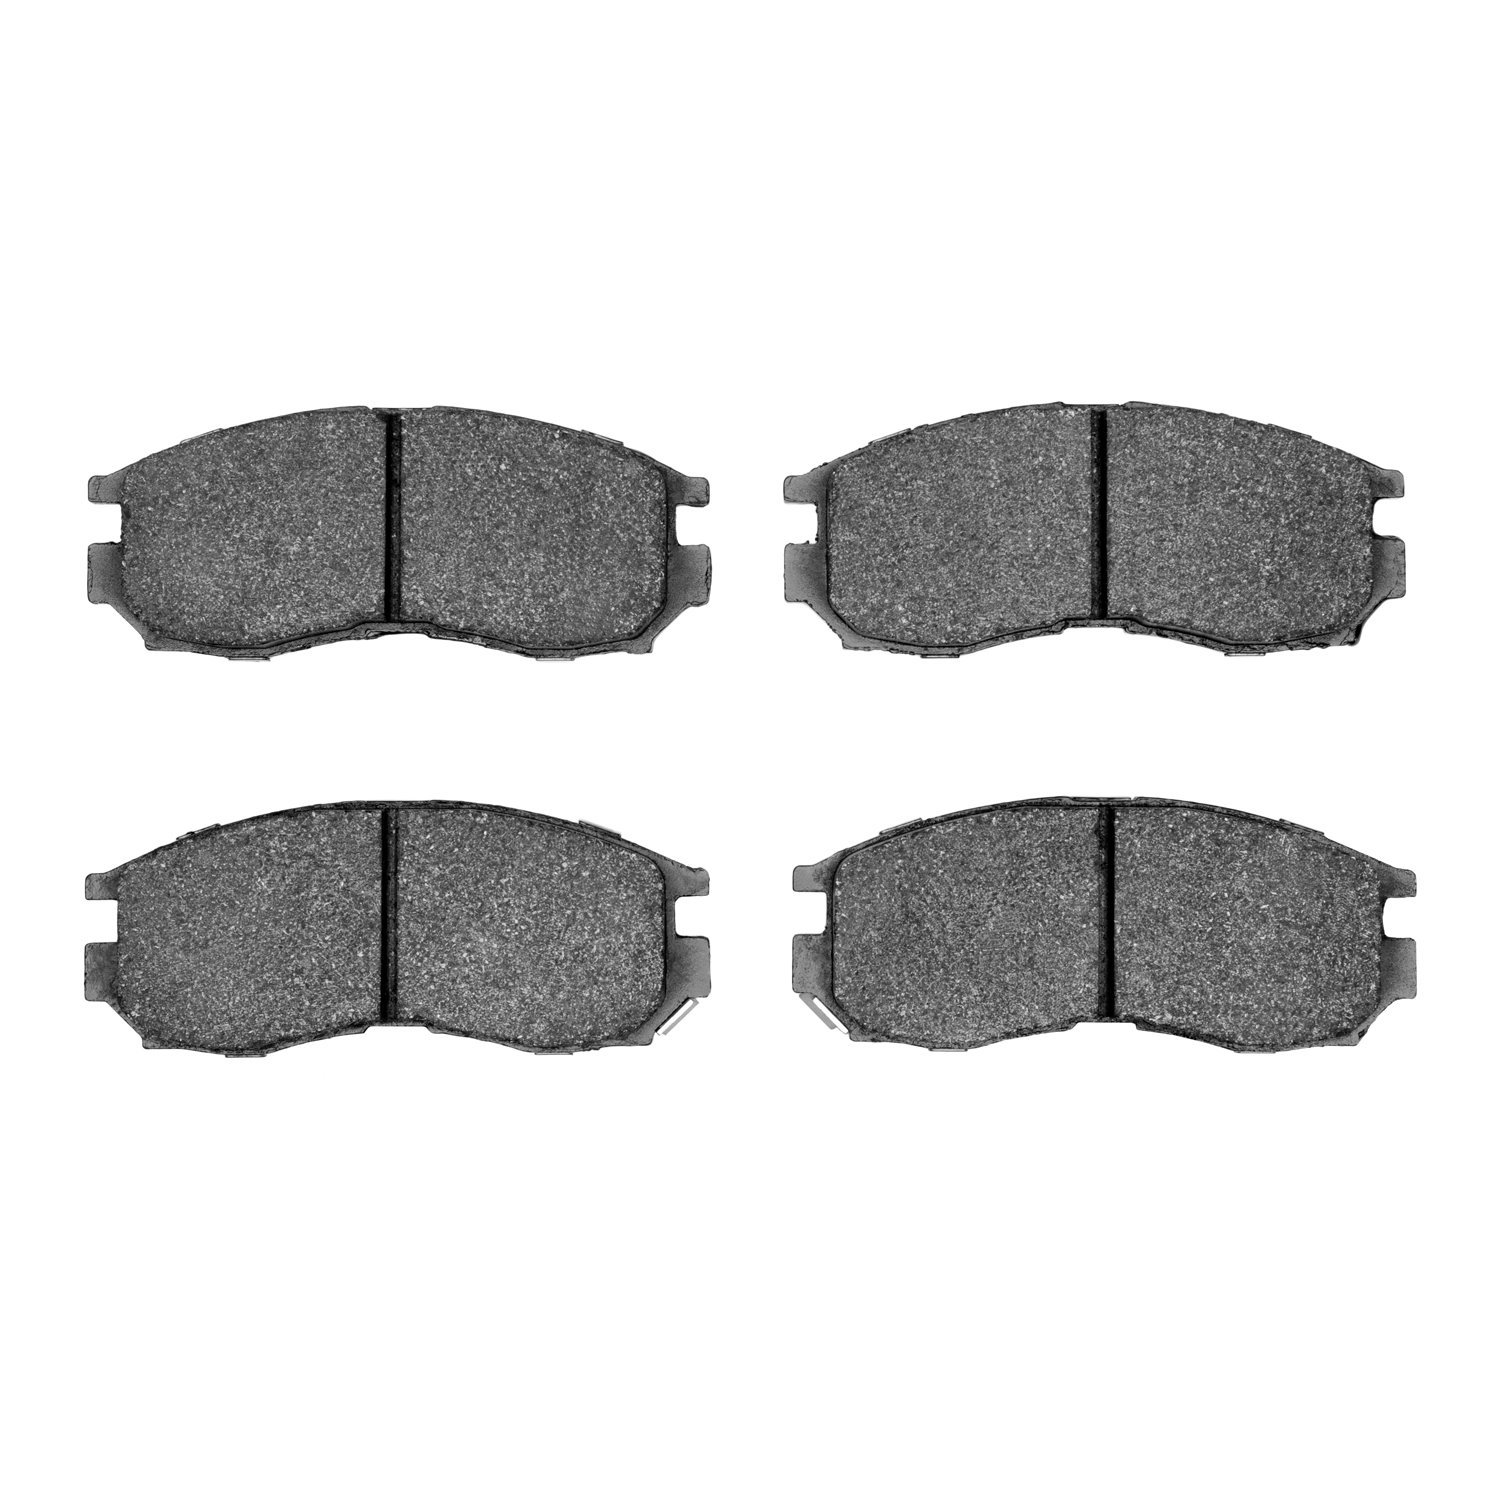 1310-0484-00 3000-Series Ceramic Brake Pads, 1989-2005 Multiple Makes/Models, Position: Front